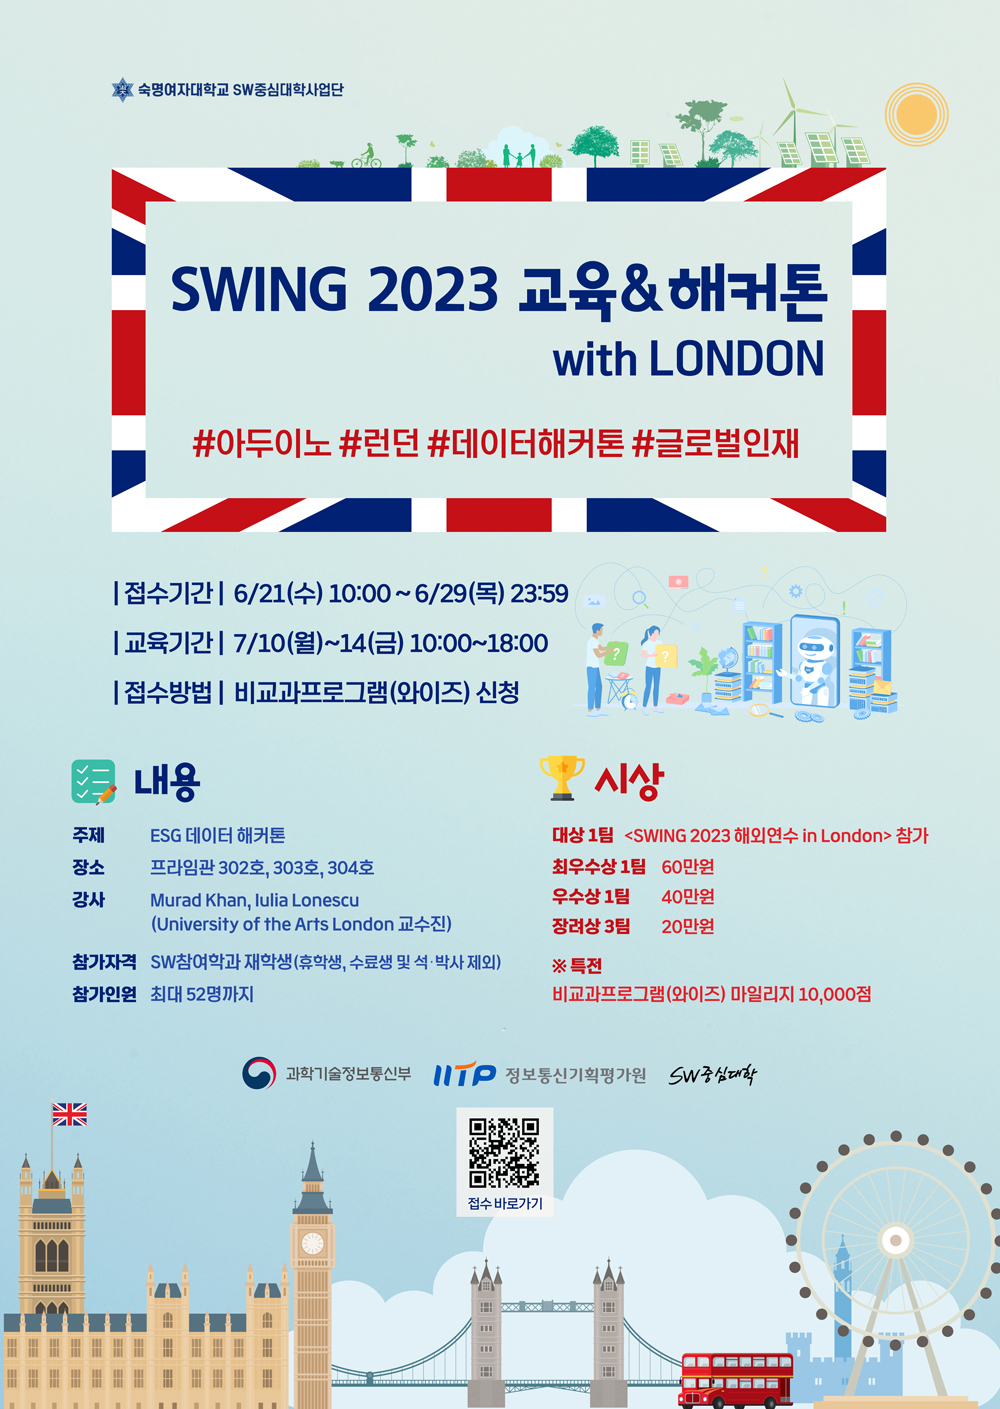 [SW중심대학사업단]SWING 2023 교육&해커톤 with London 참가자 공모